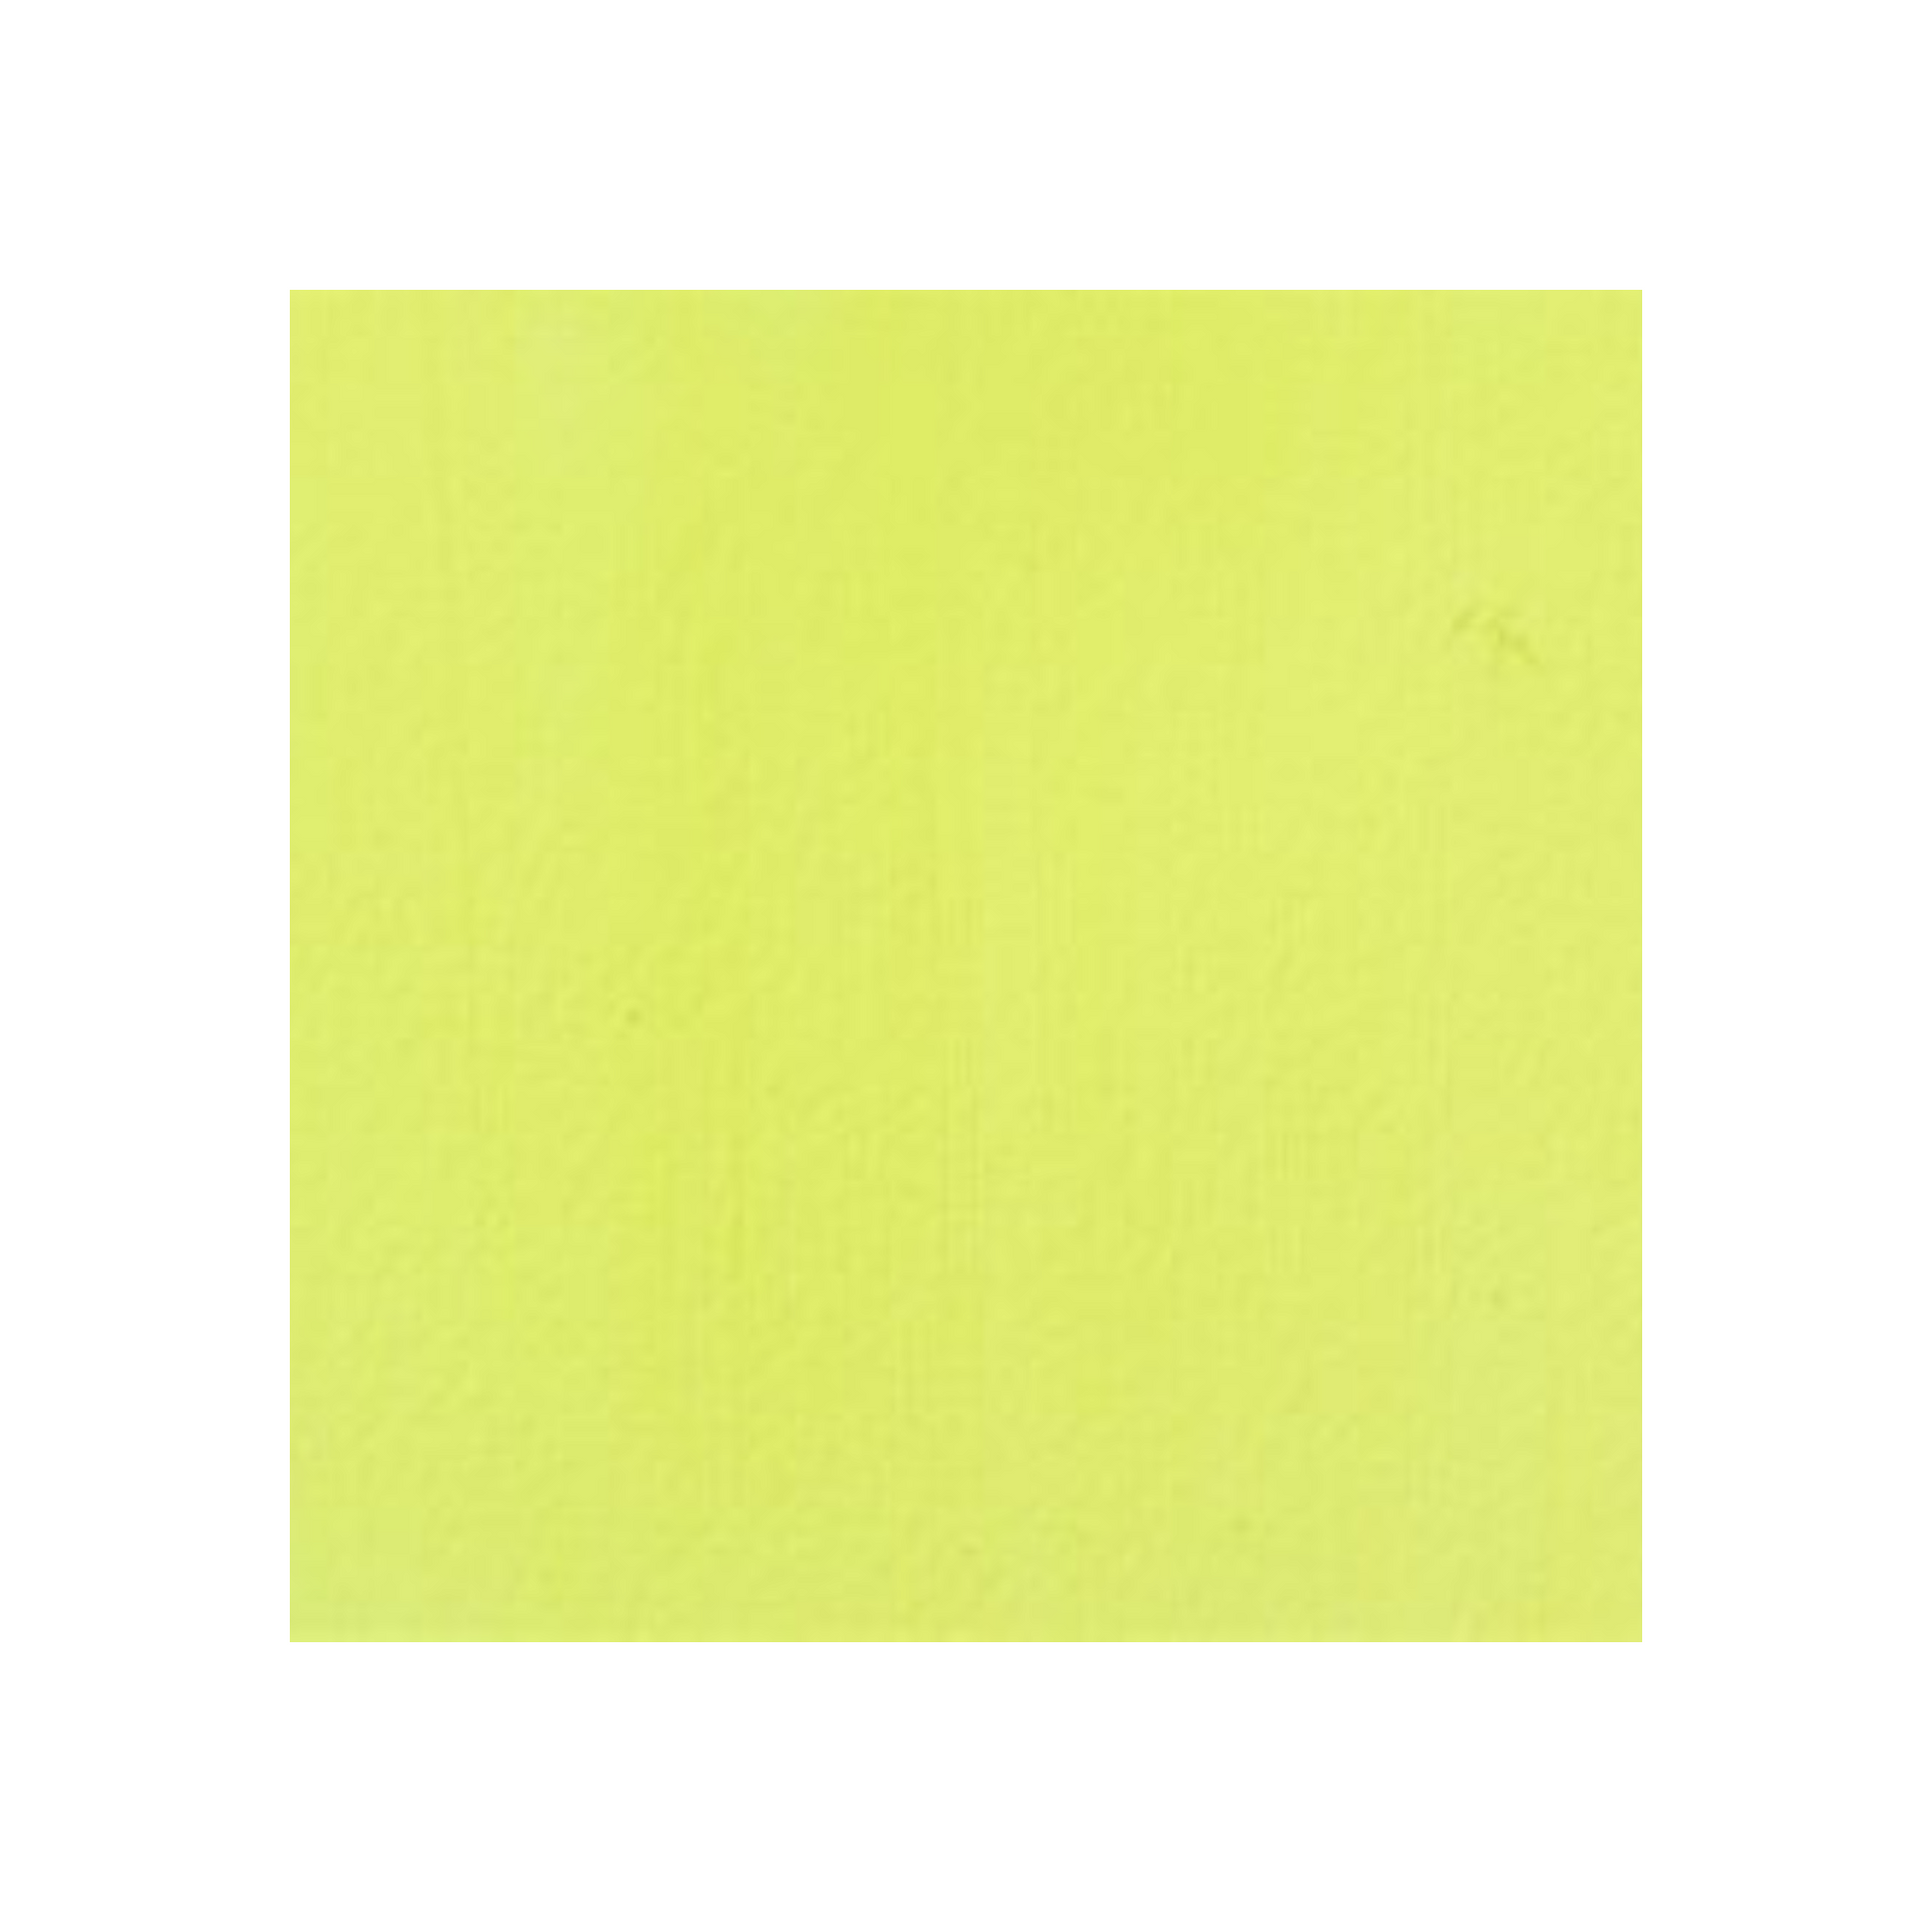 Fluorescent yellow Liquitex Professional Heavy Body Acrylic paint colour swatch